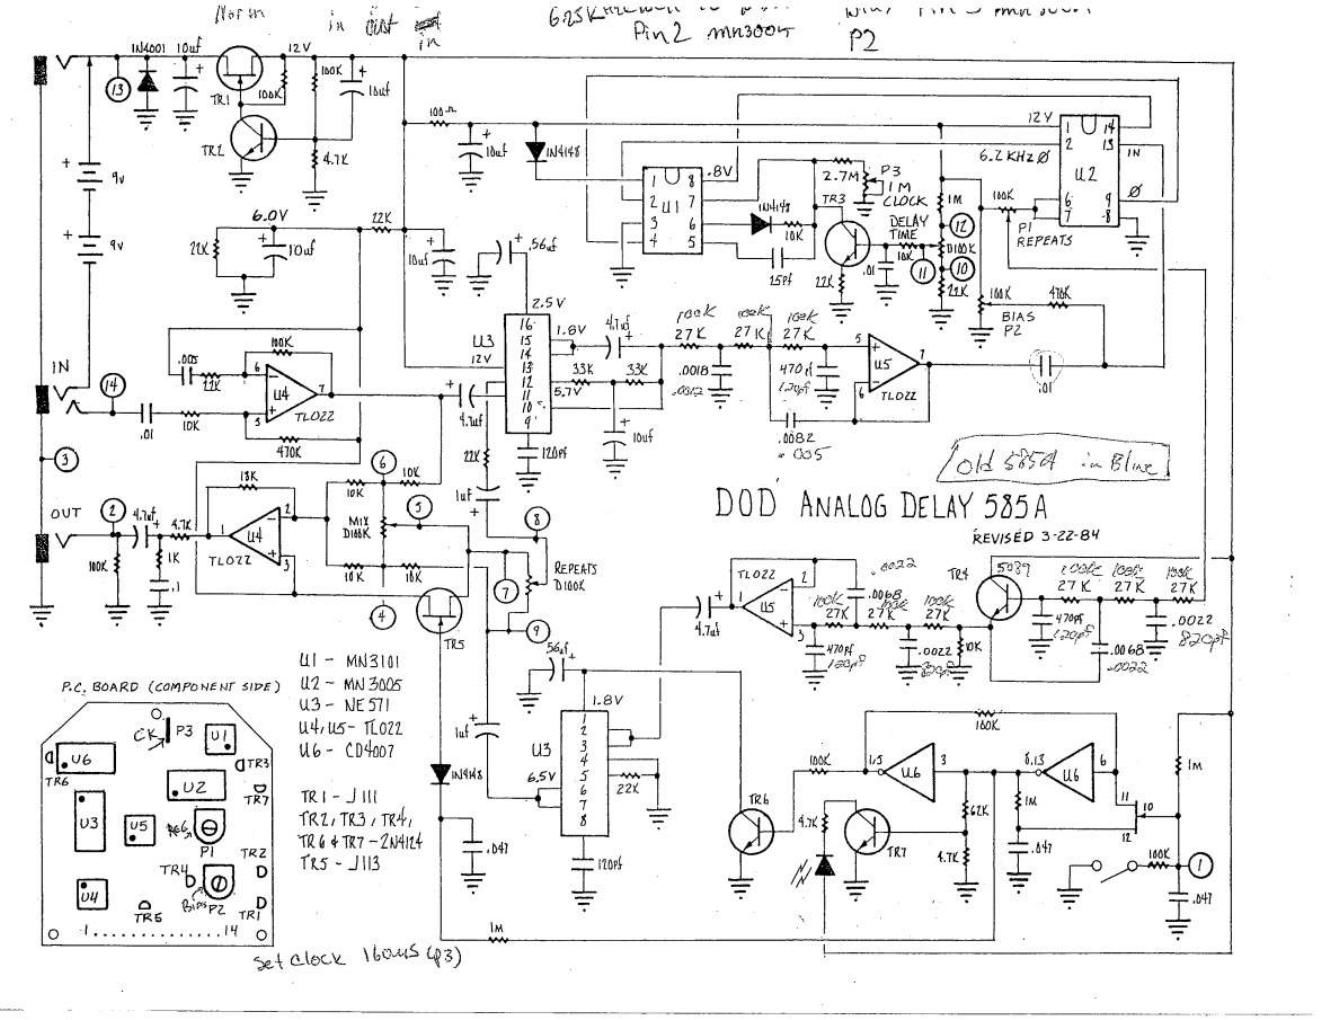 dod 585a analog delay schematic